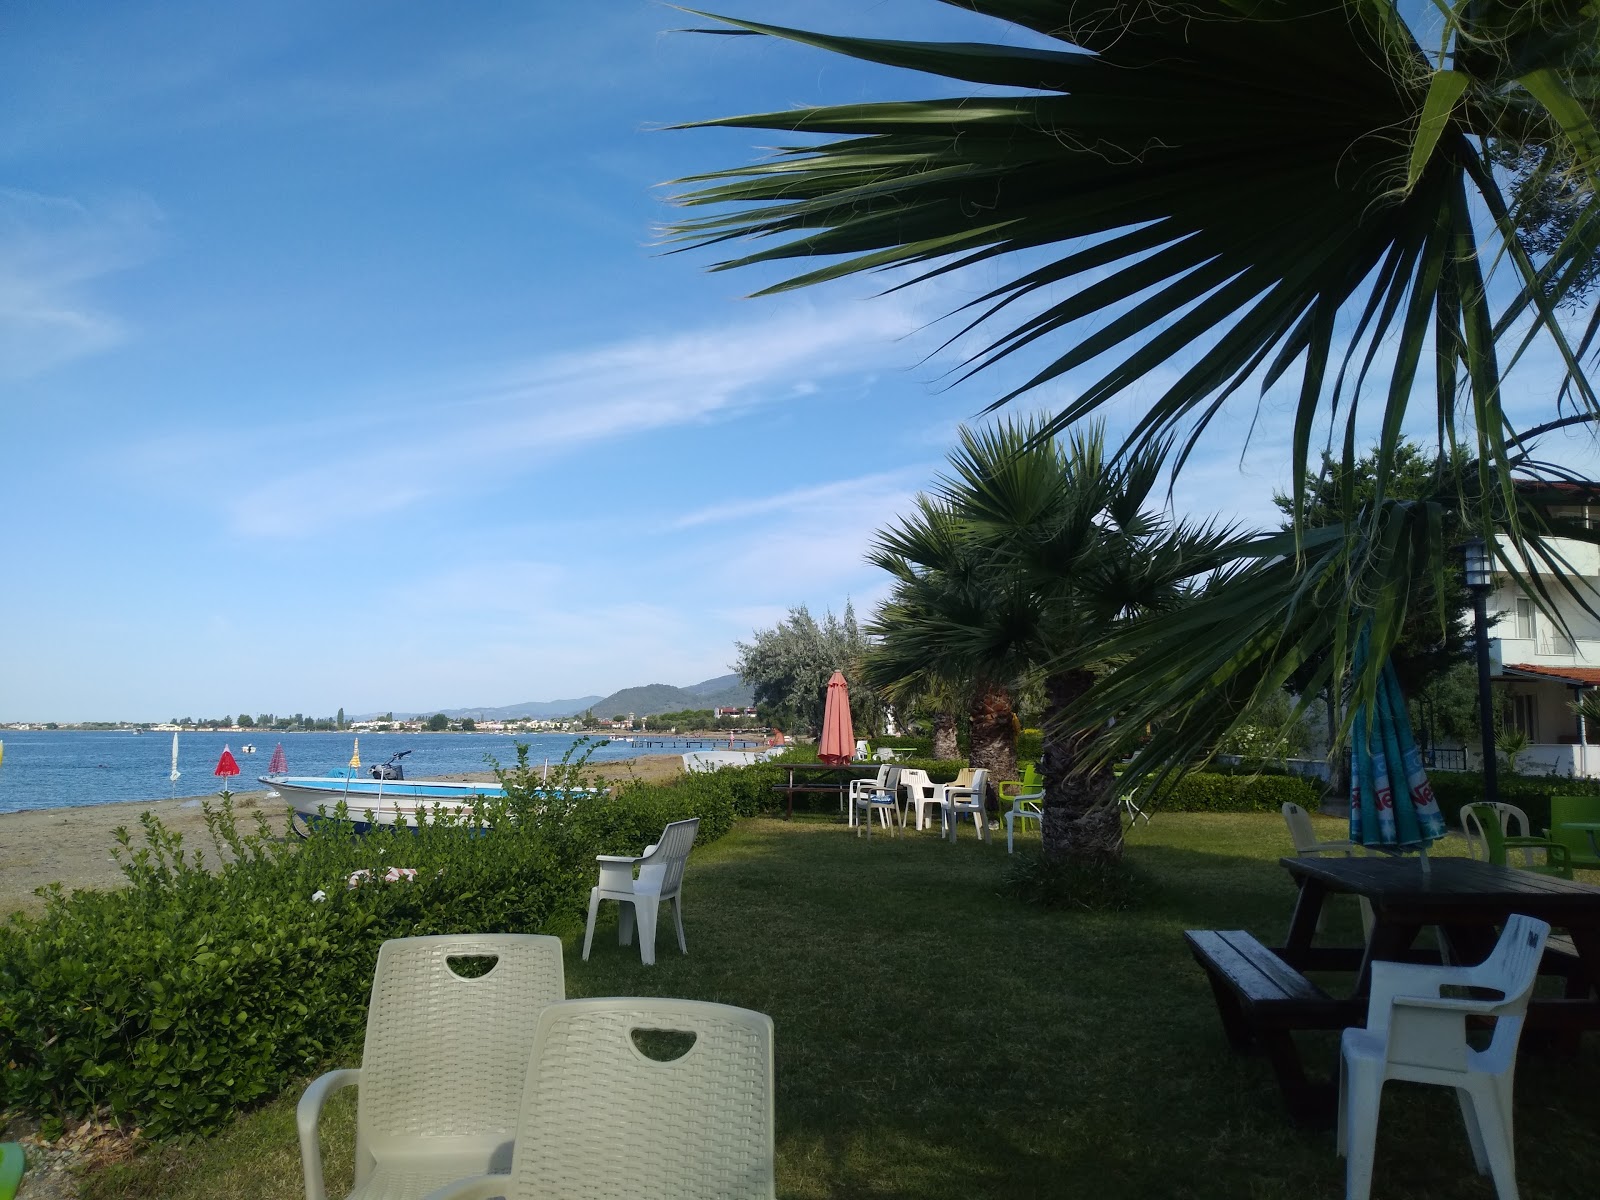 Foto de Imbat beach - lugar popular entre os apreciadores de relaxamento